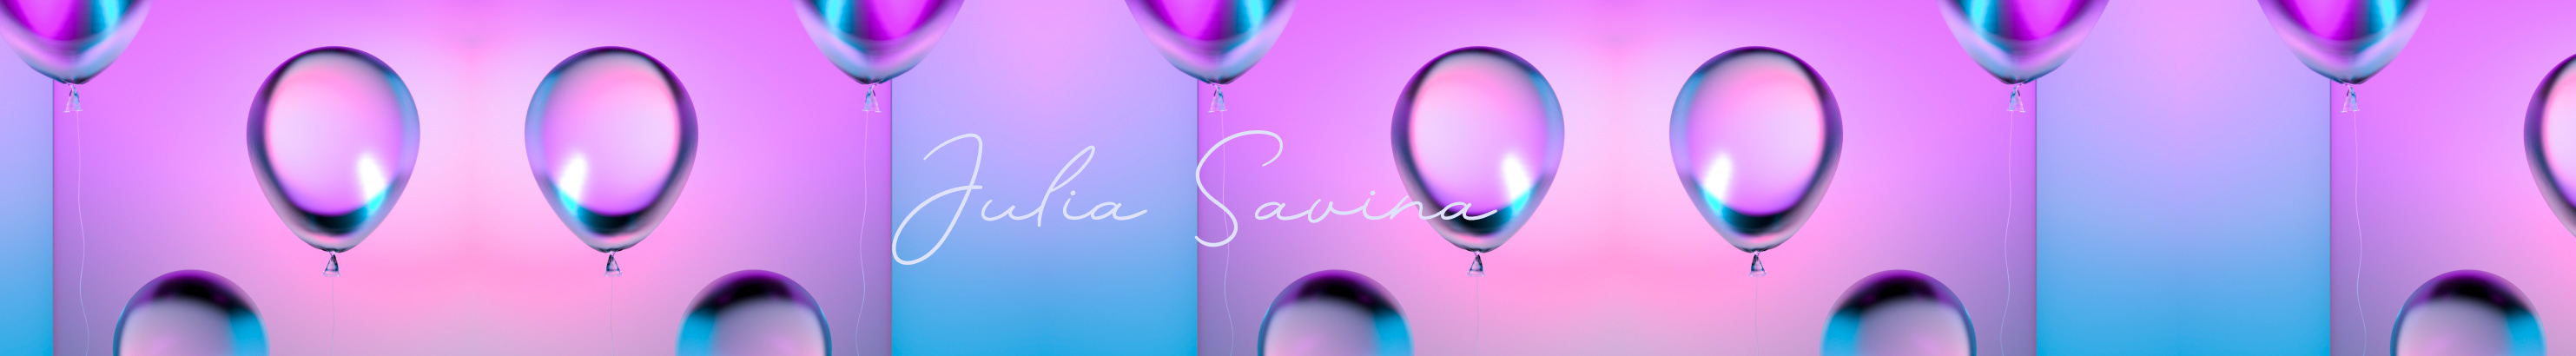 Julia Savina's profile banner